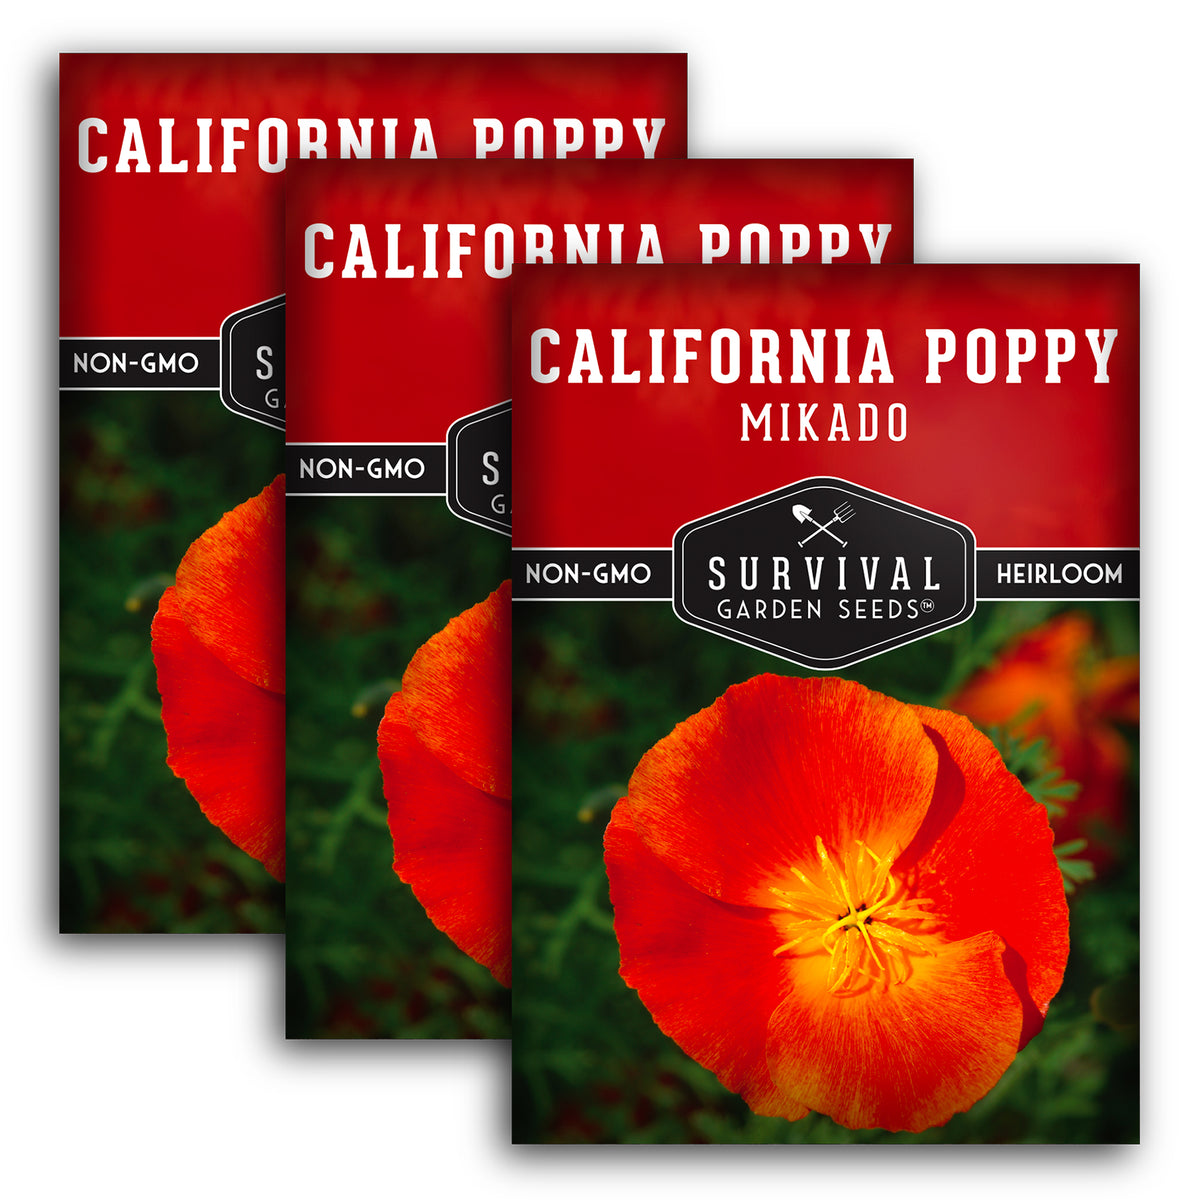 3 packets of Mikado California Poppy seeds